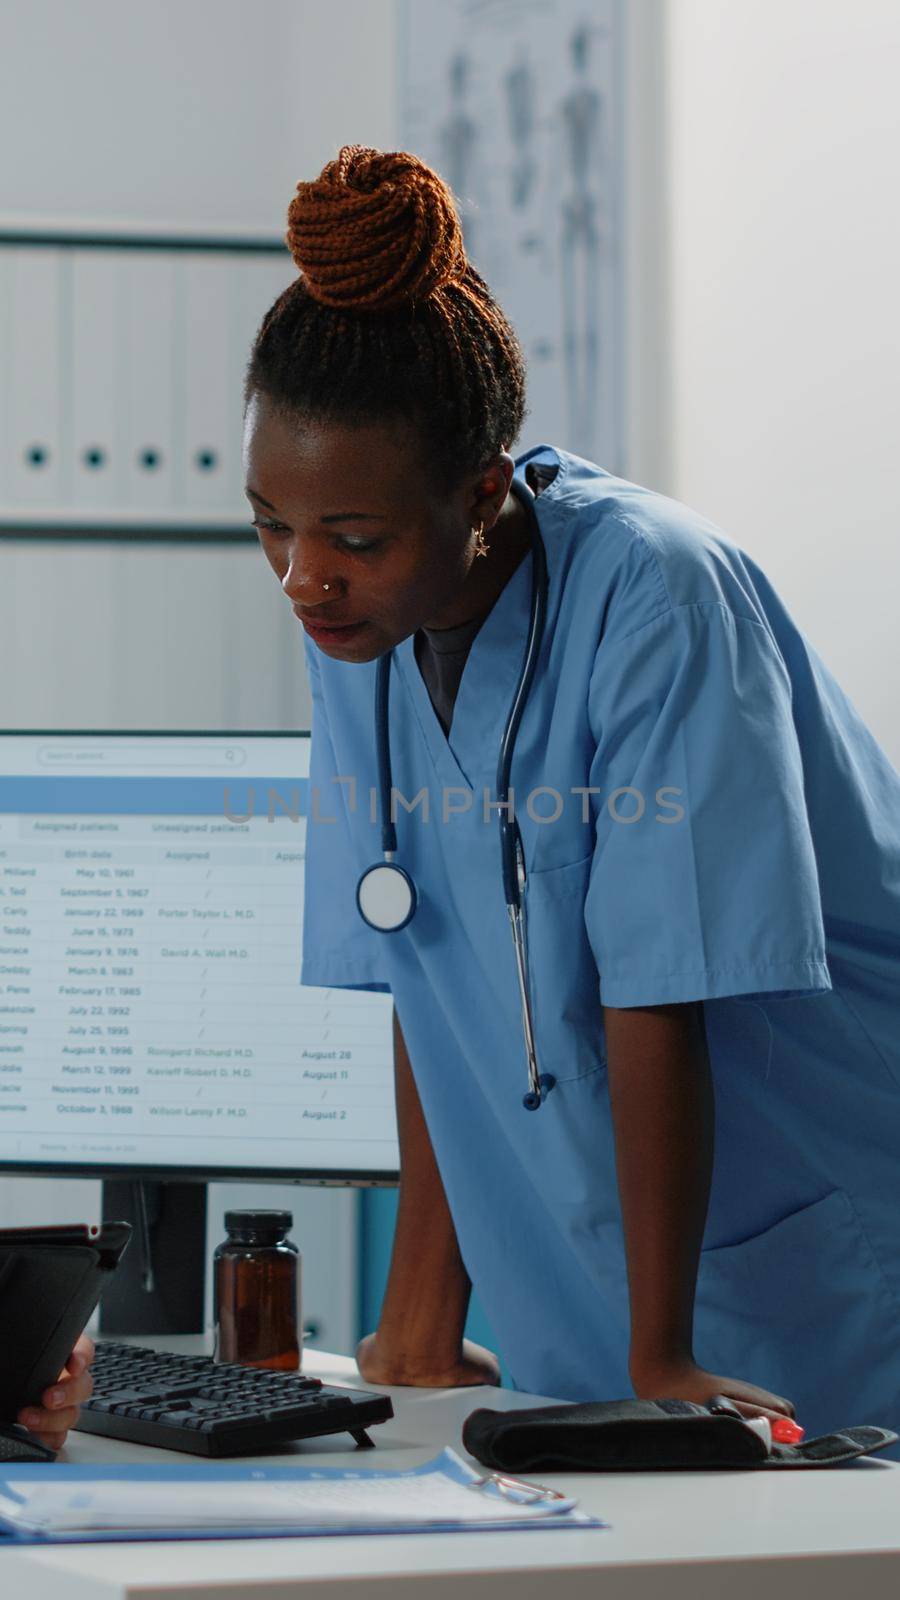 Multi ethnic team of nurses looking at digital tablet by DCStudio